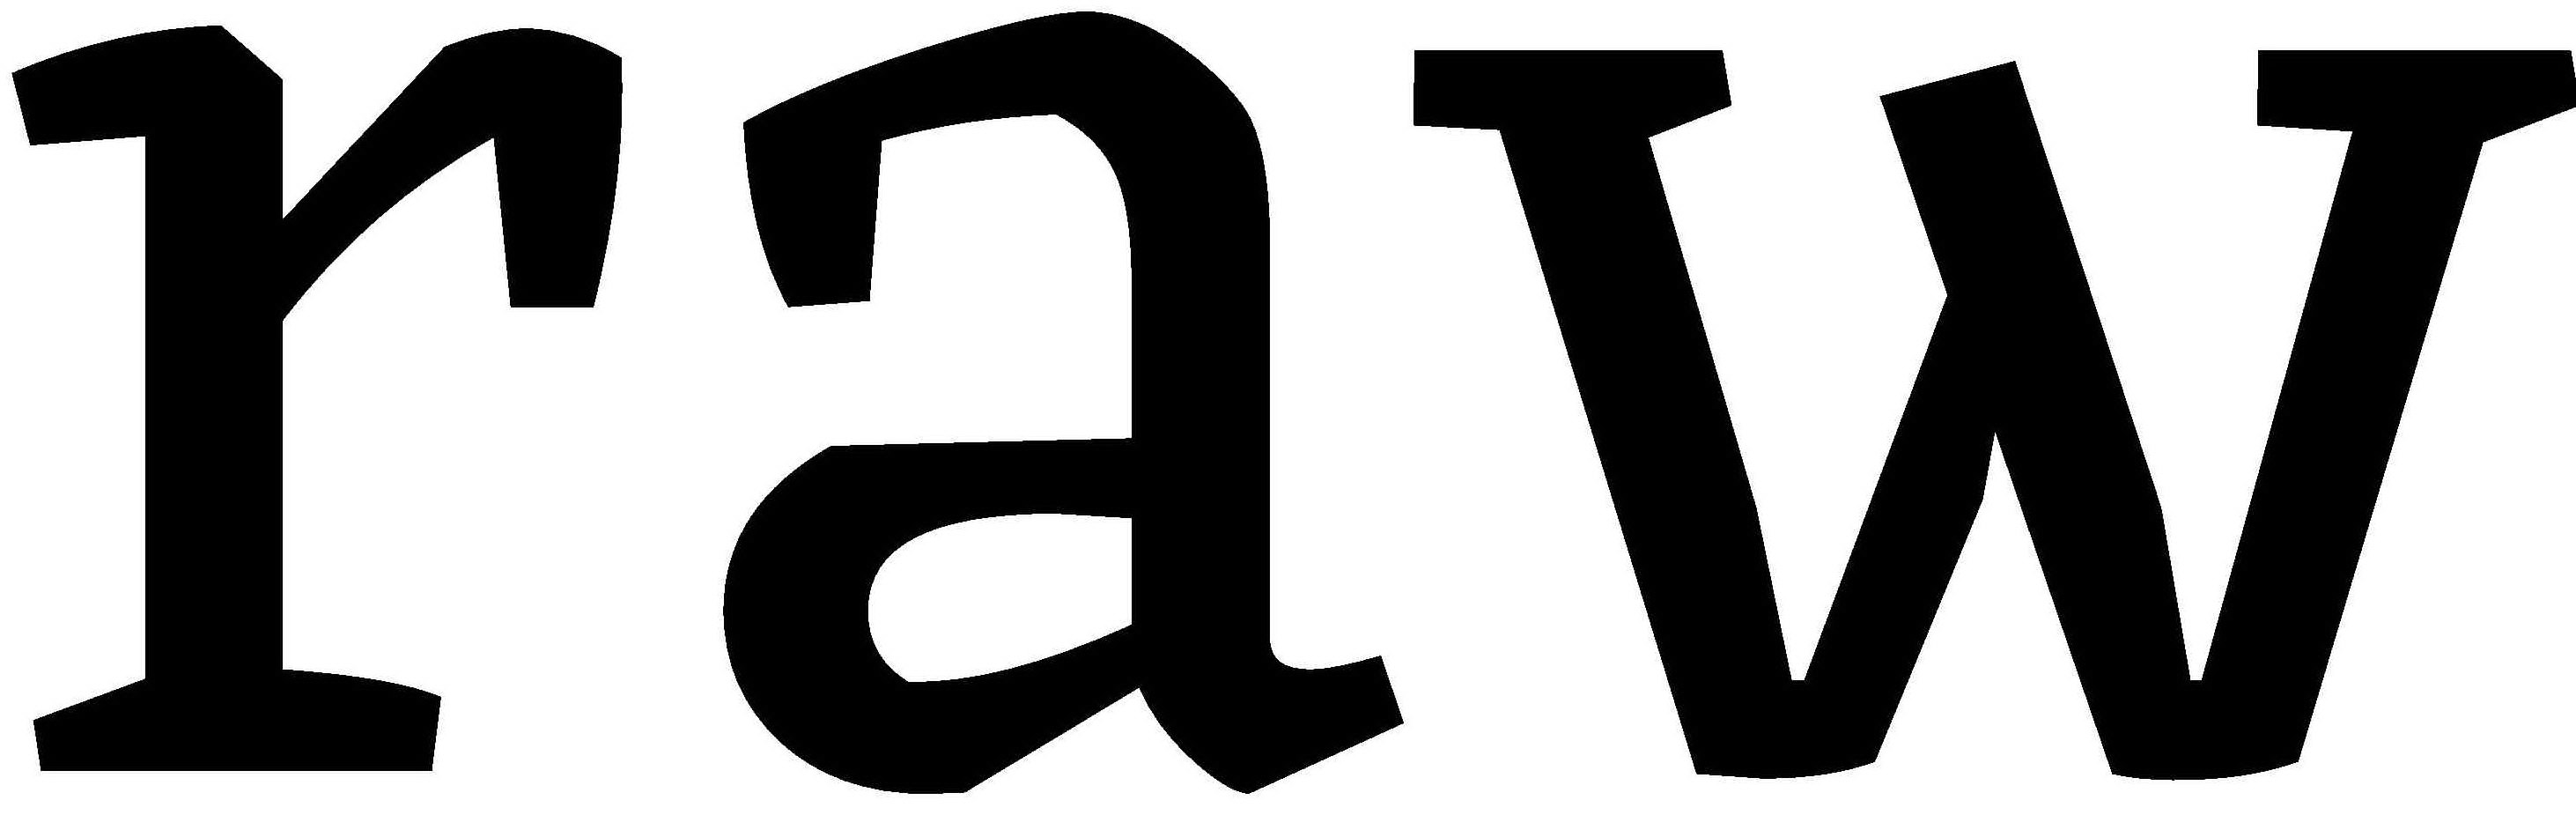 Trademark Logo RAW